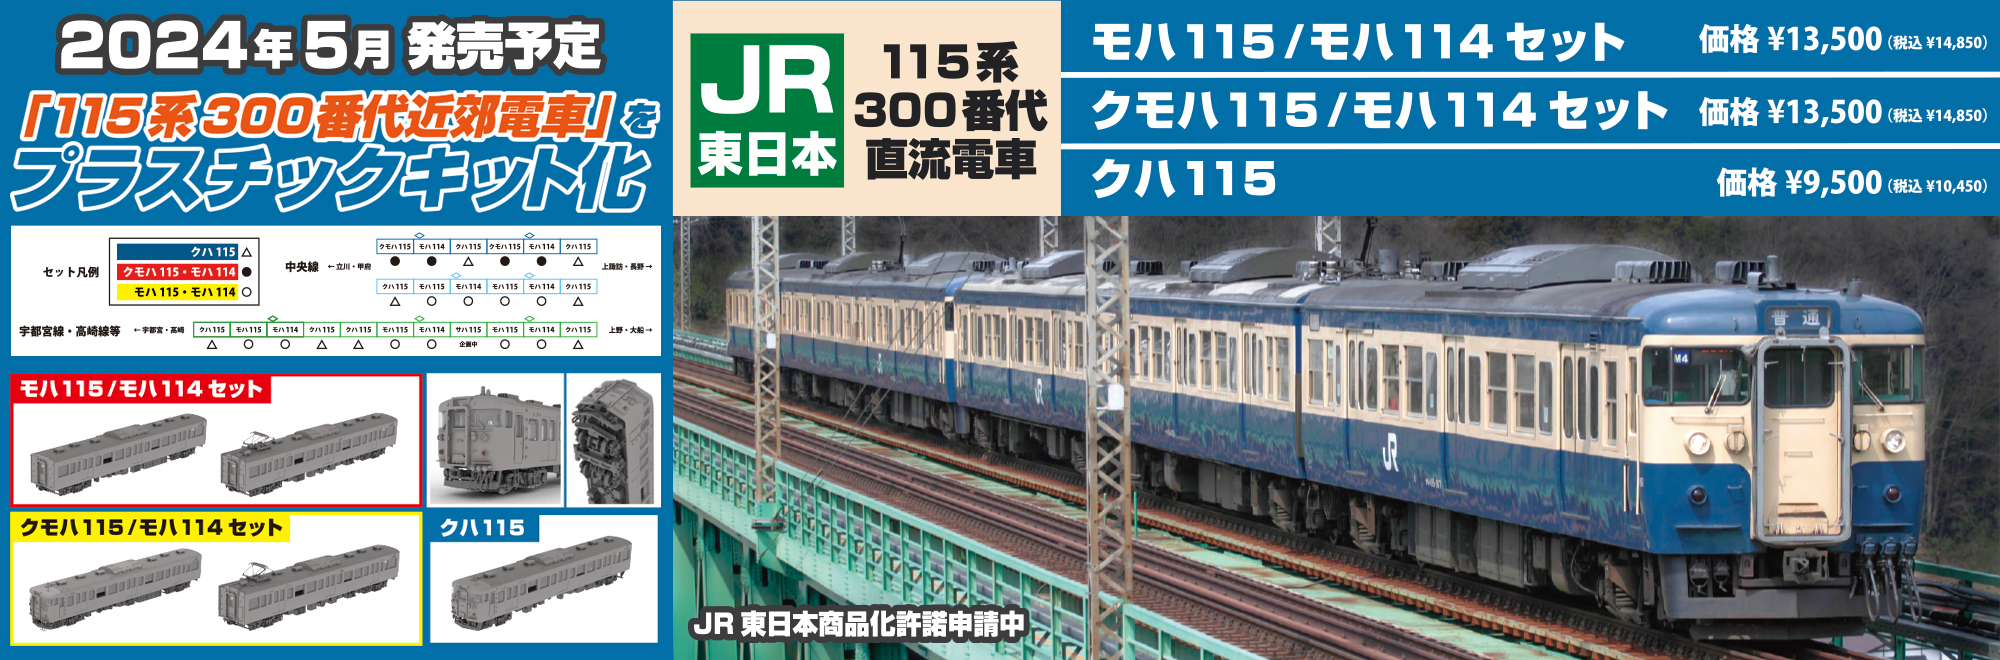 JR東日本115系300番代直流電車